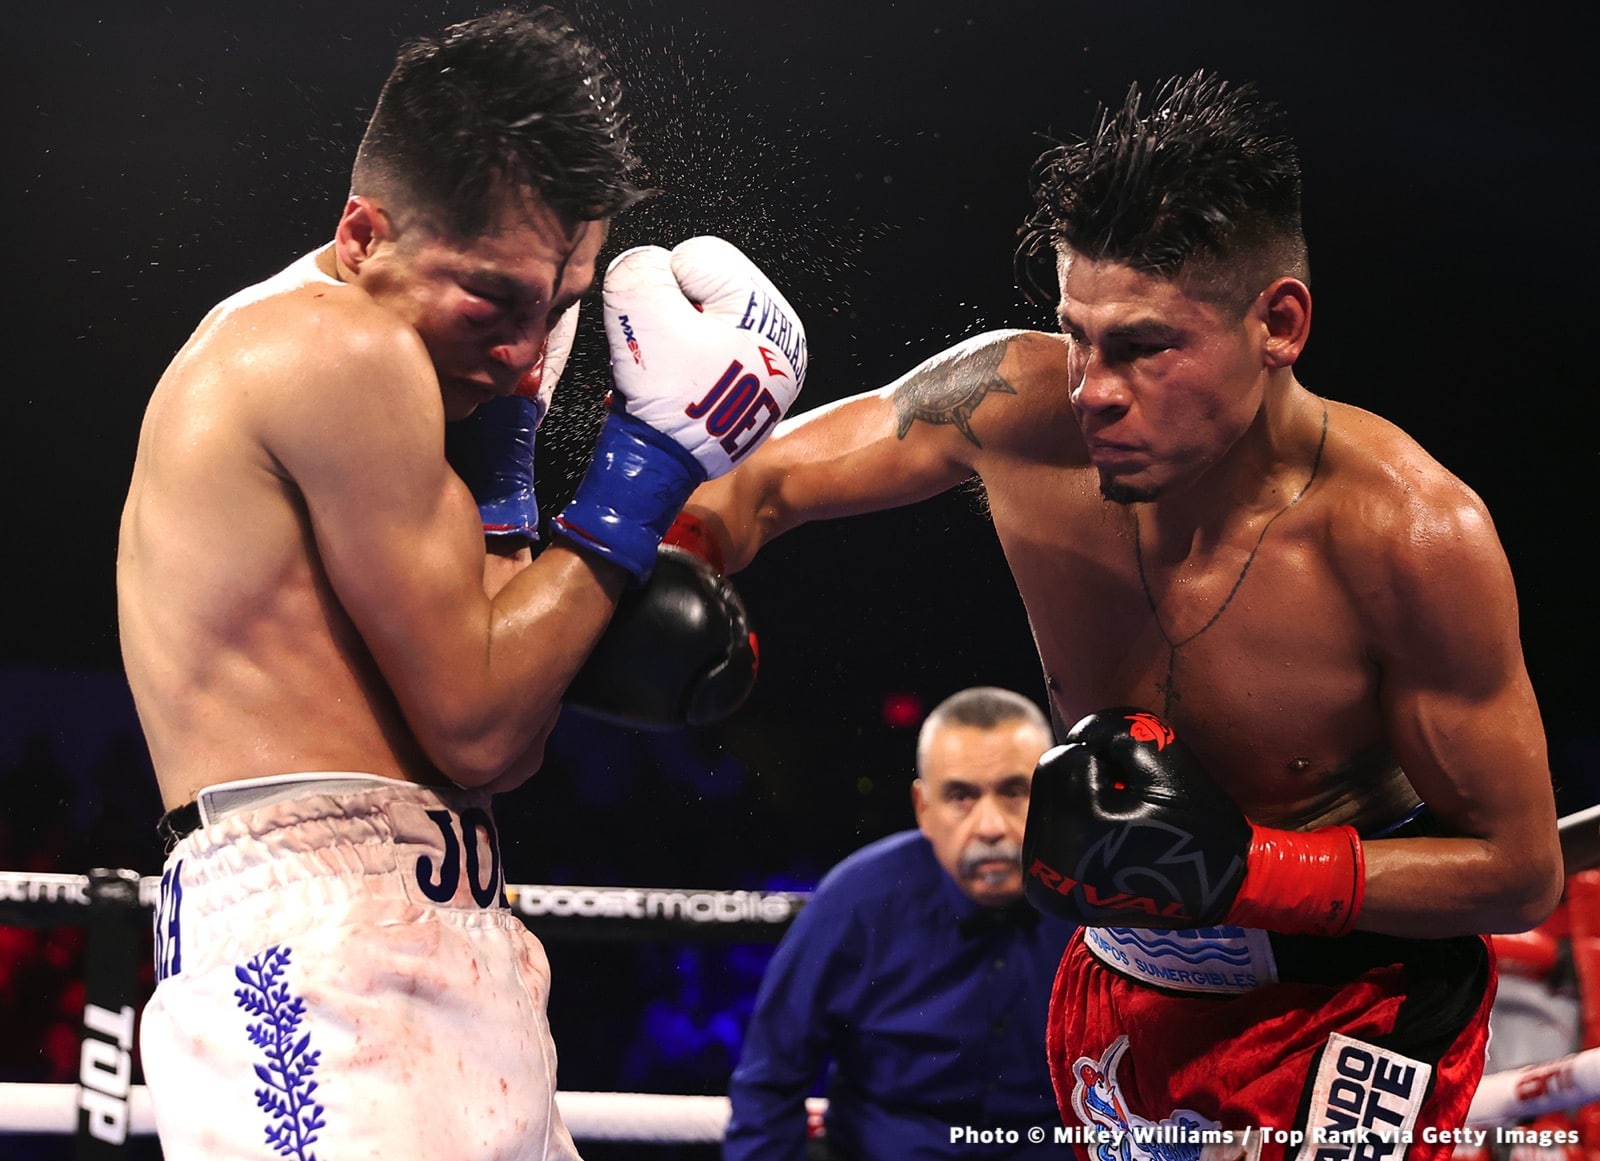 Emanuel Navarrete, Joet Gonzalez boxing image / photo